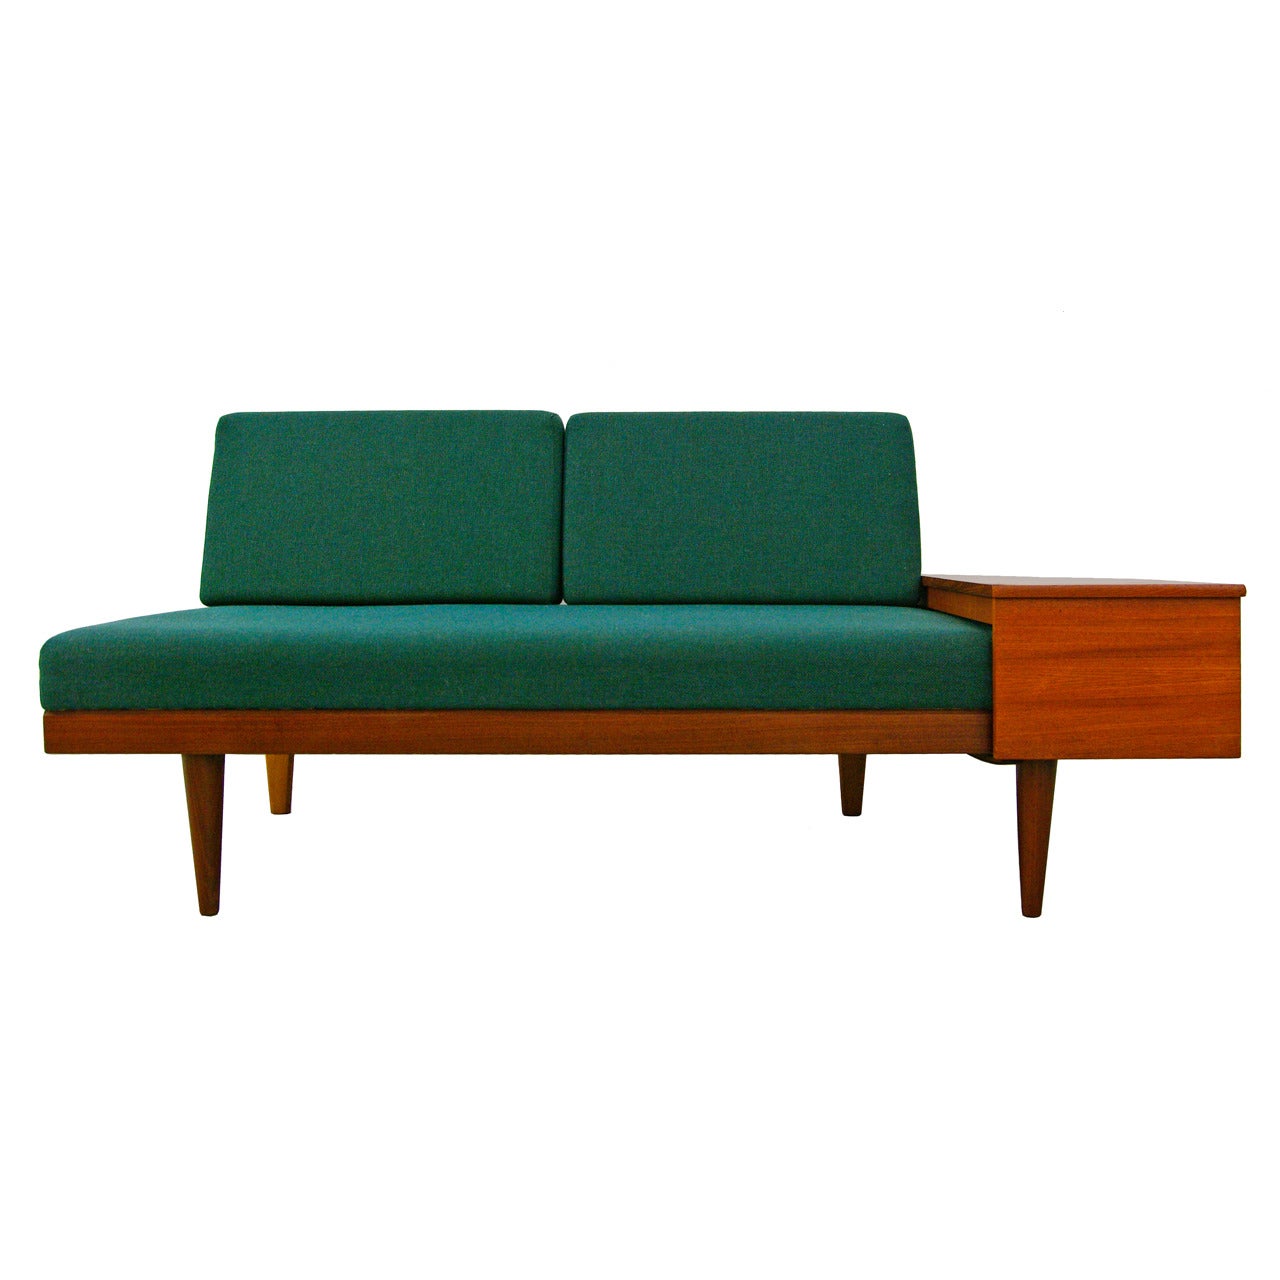 Sofa | Daybed By Swane Norway Teak Midcentury Modern 60s Table